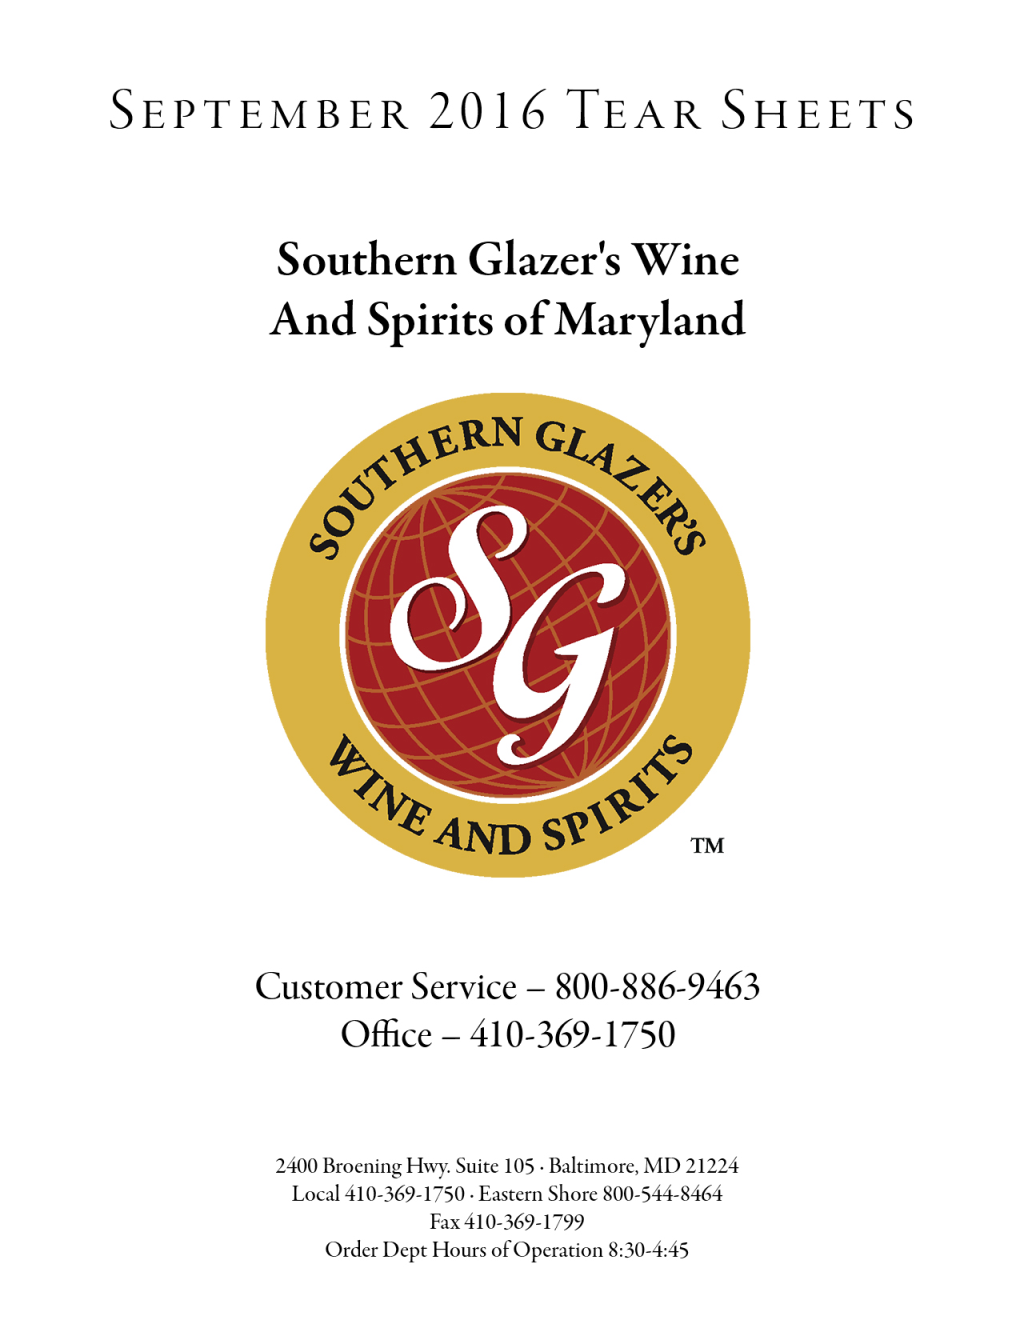 Southern Glazer's Wine & Spirits of Maryland